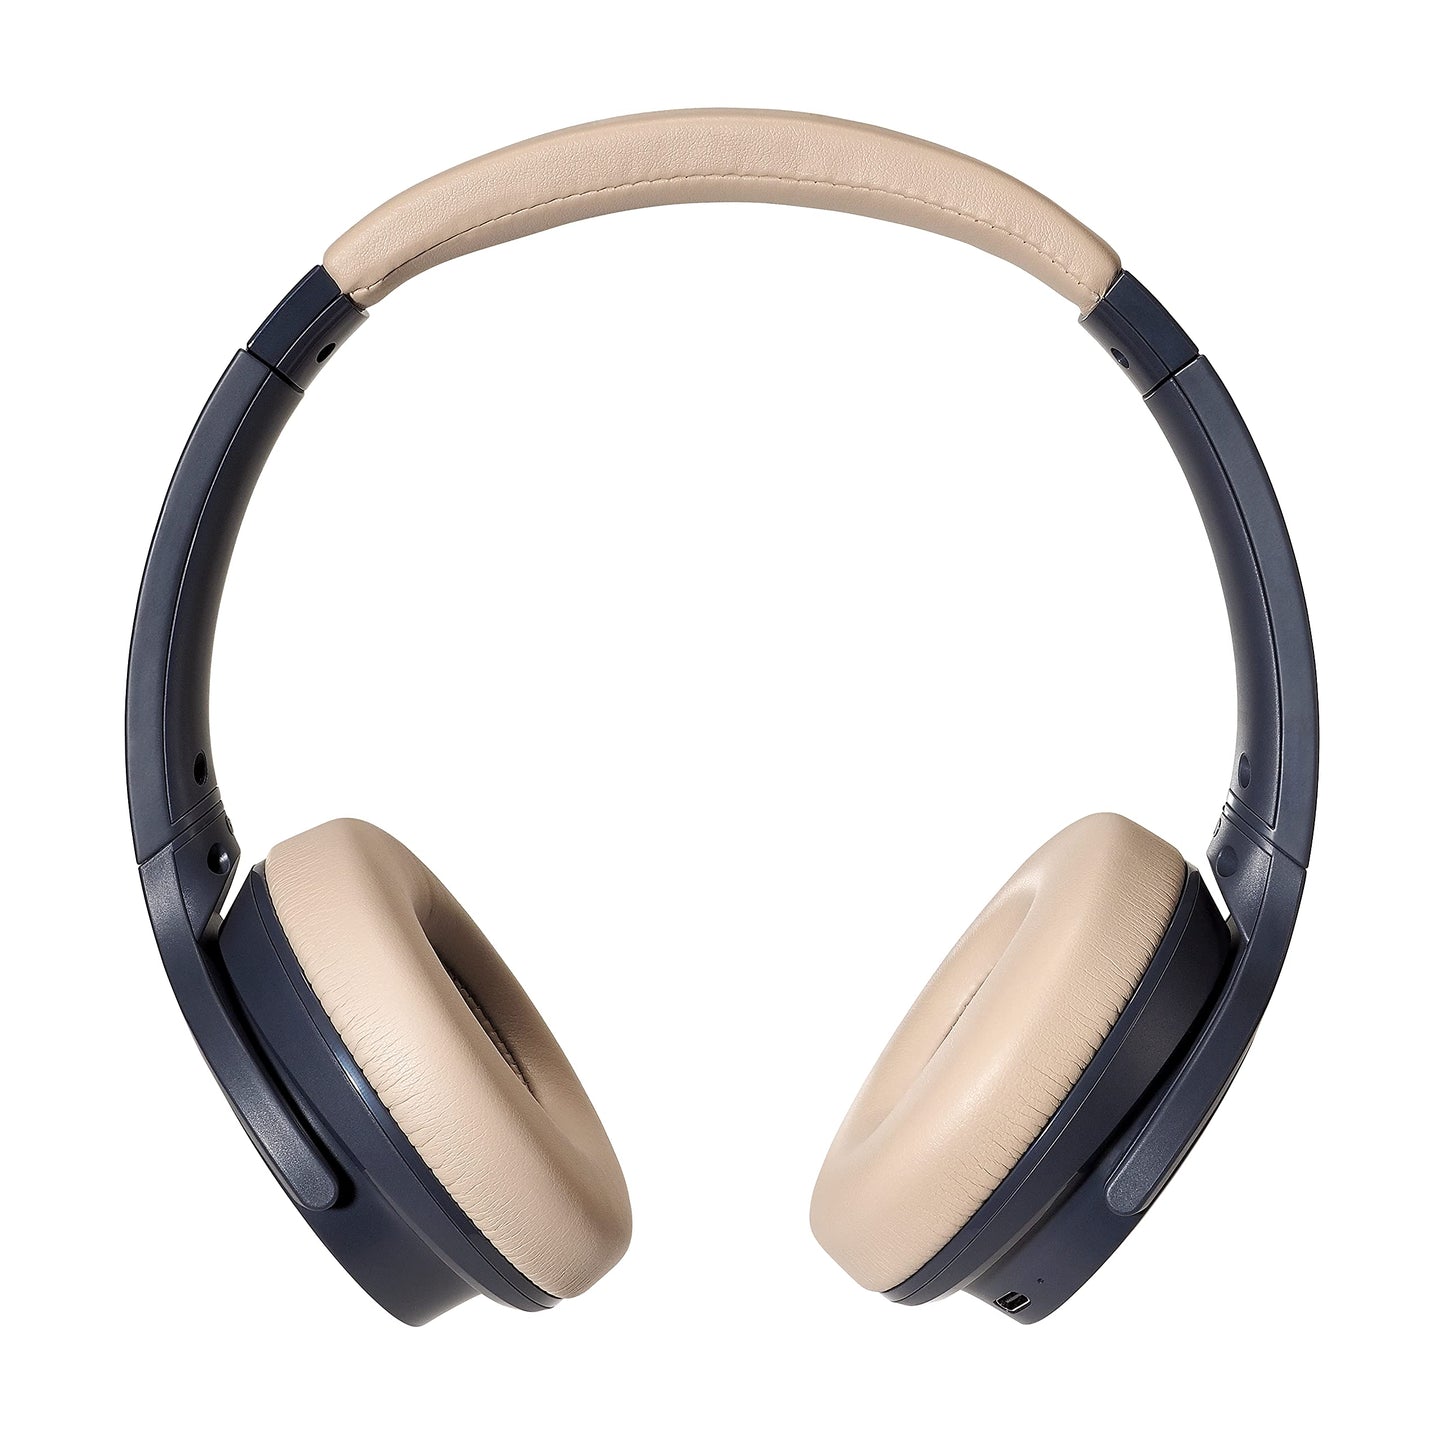 Audio-Technica ATH-S220BTNBG Wireless On Ear Headphones, Navy/Beige